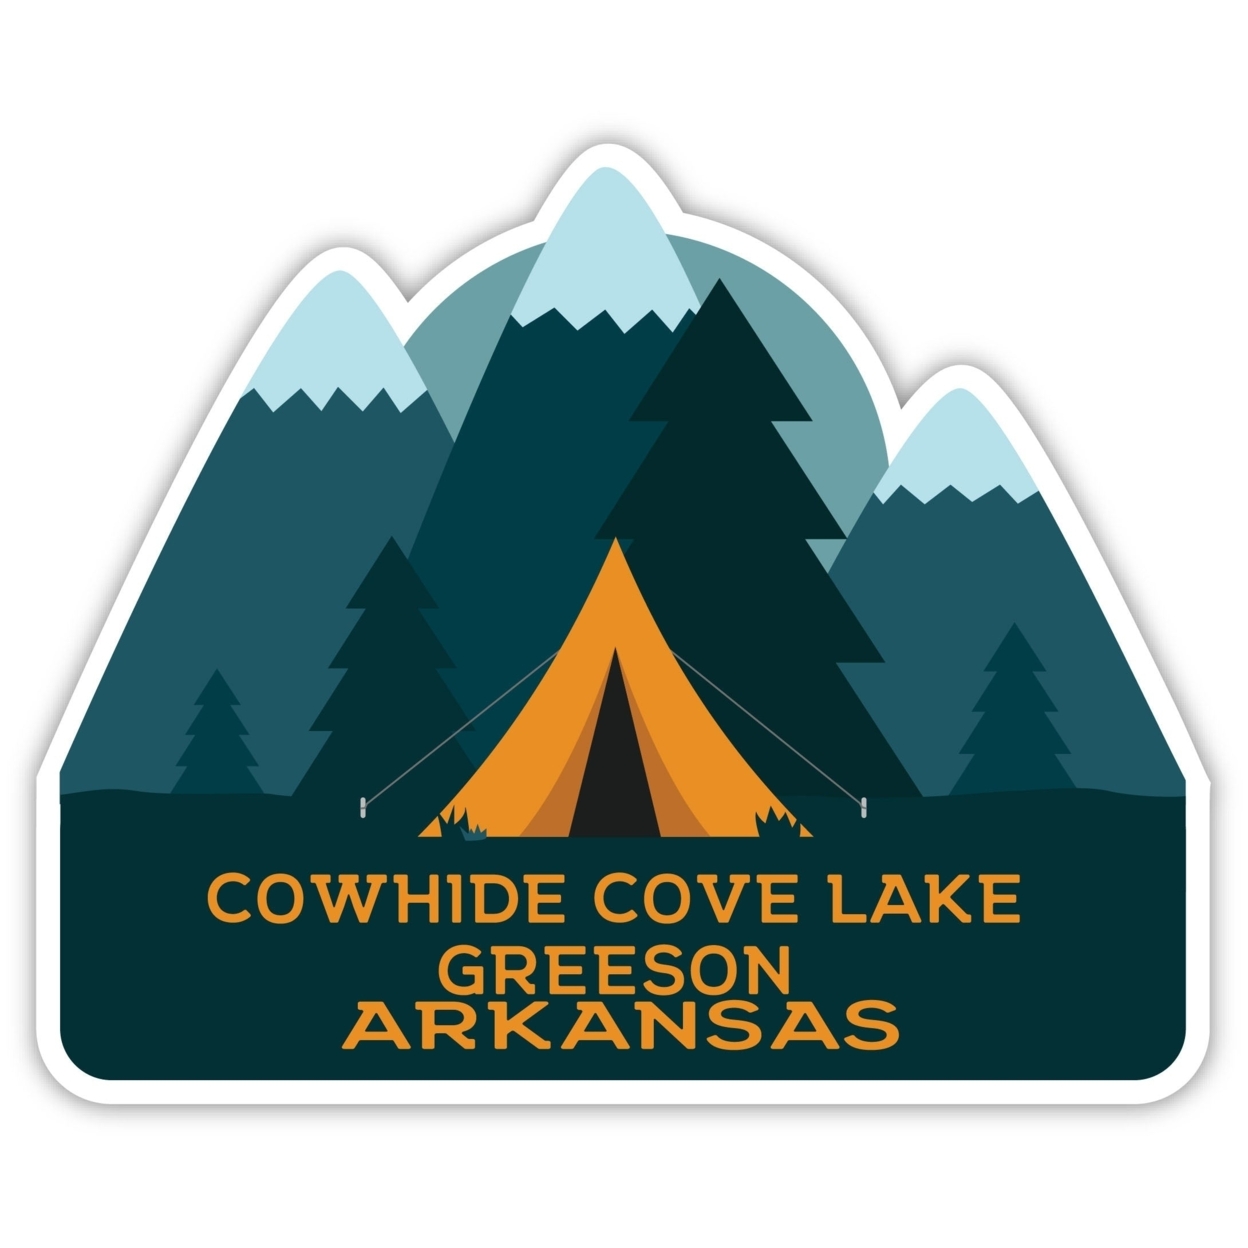 Cowhide Cove Lake Greeson Arkansas Souvenir Decorative Stickers (Choose Theme And Size) - 4-Pack, 2-Inch, Bear